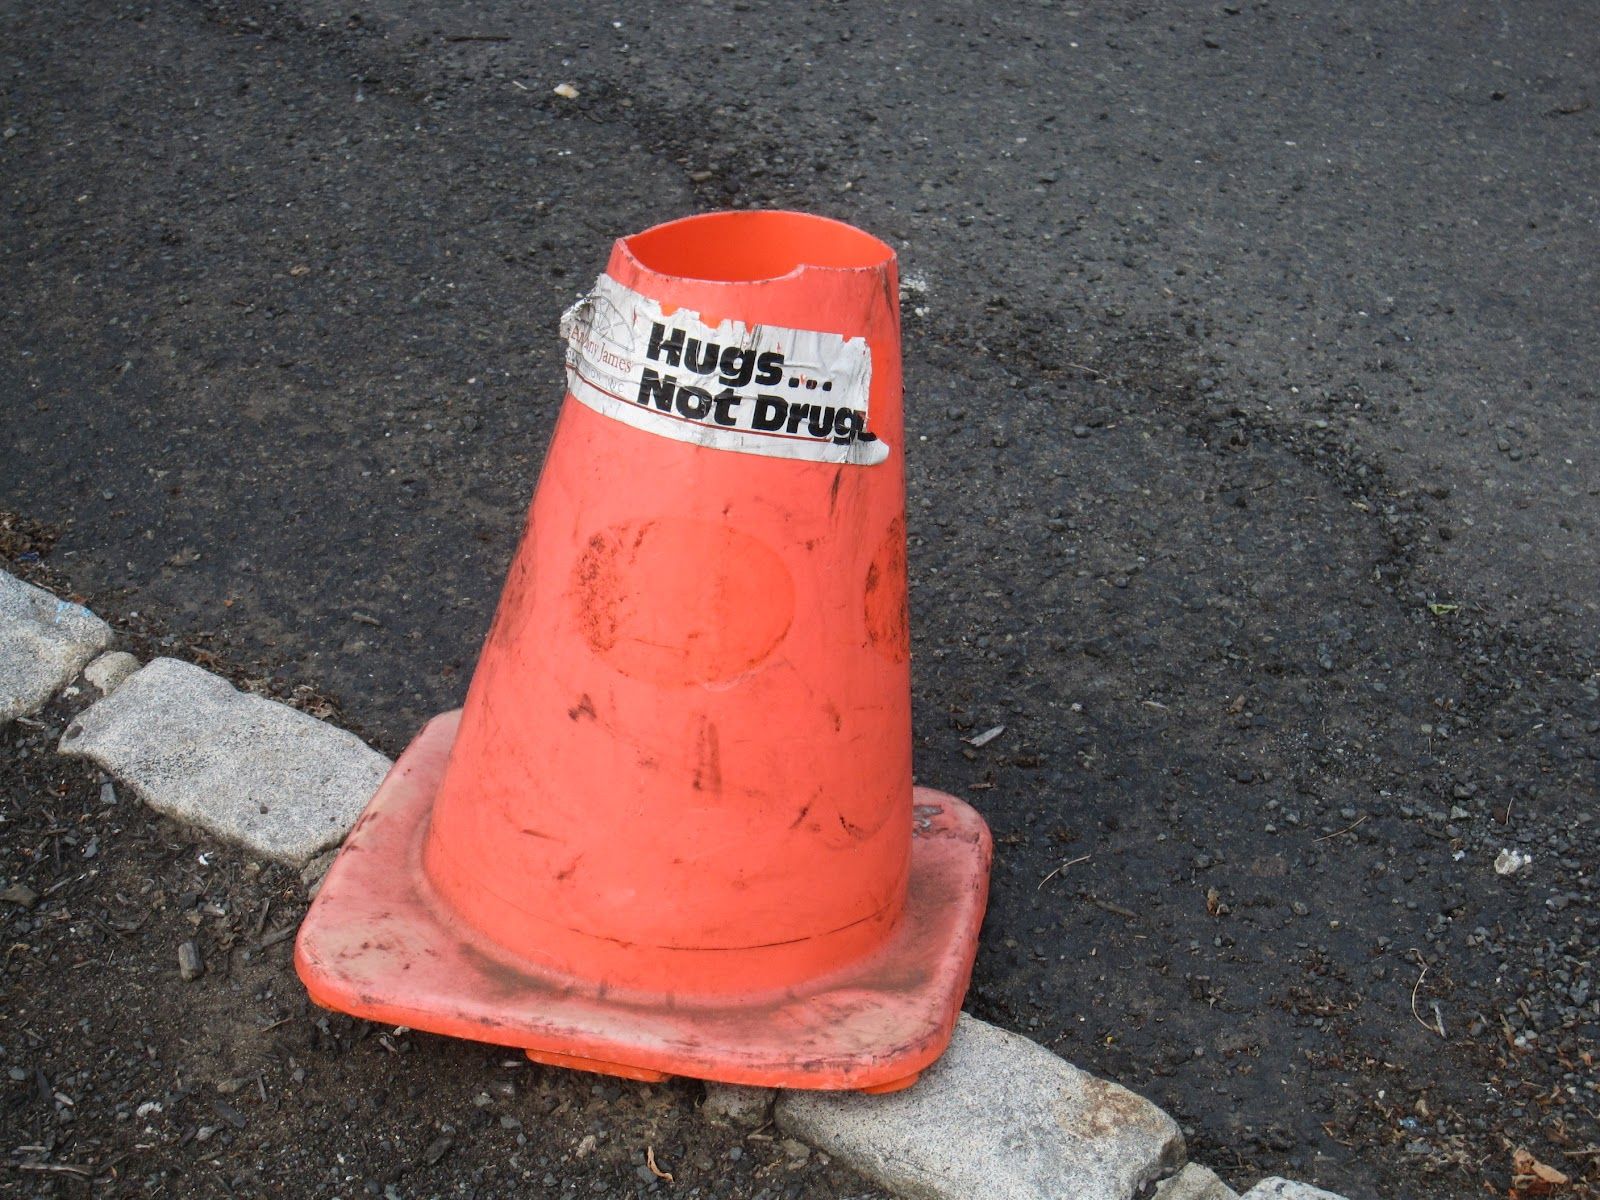 anti drug traffic cone | Old Traffic Cones | Pinterest